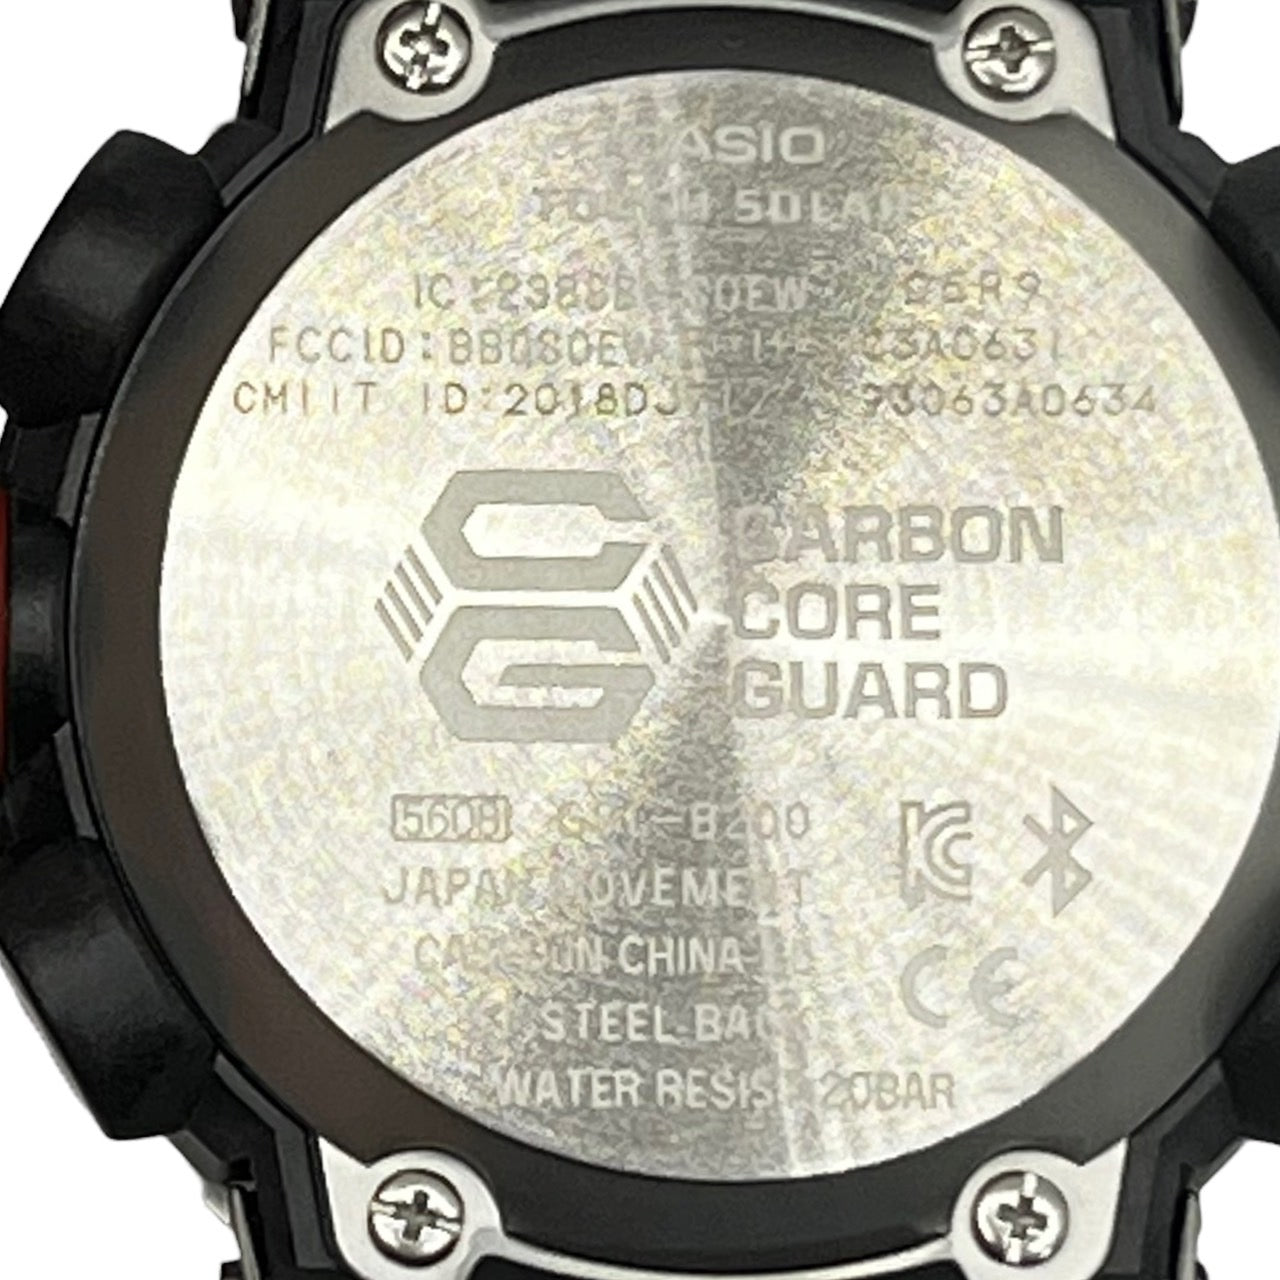 CASIO(カシオ) G-STEEL/ソーラーデジタルウォッチ/腕時計 GST-B200-1AJF メタル/ブラック ソーラー、Bluetooth